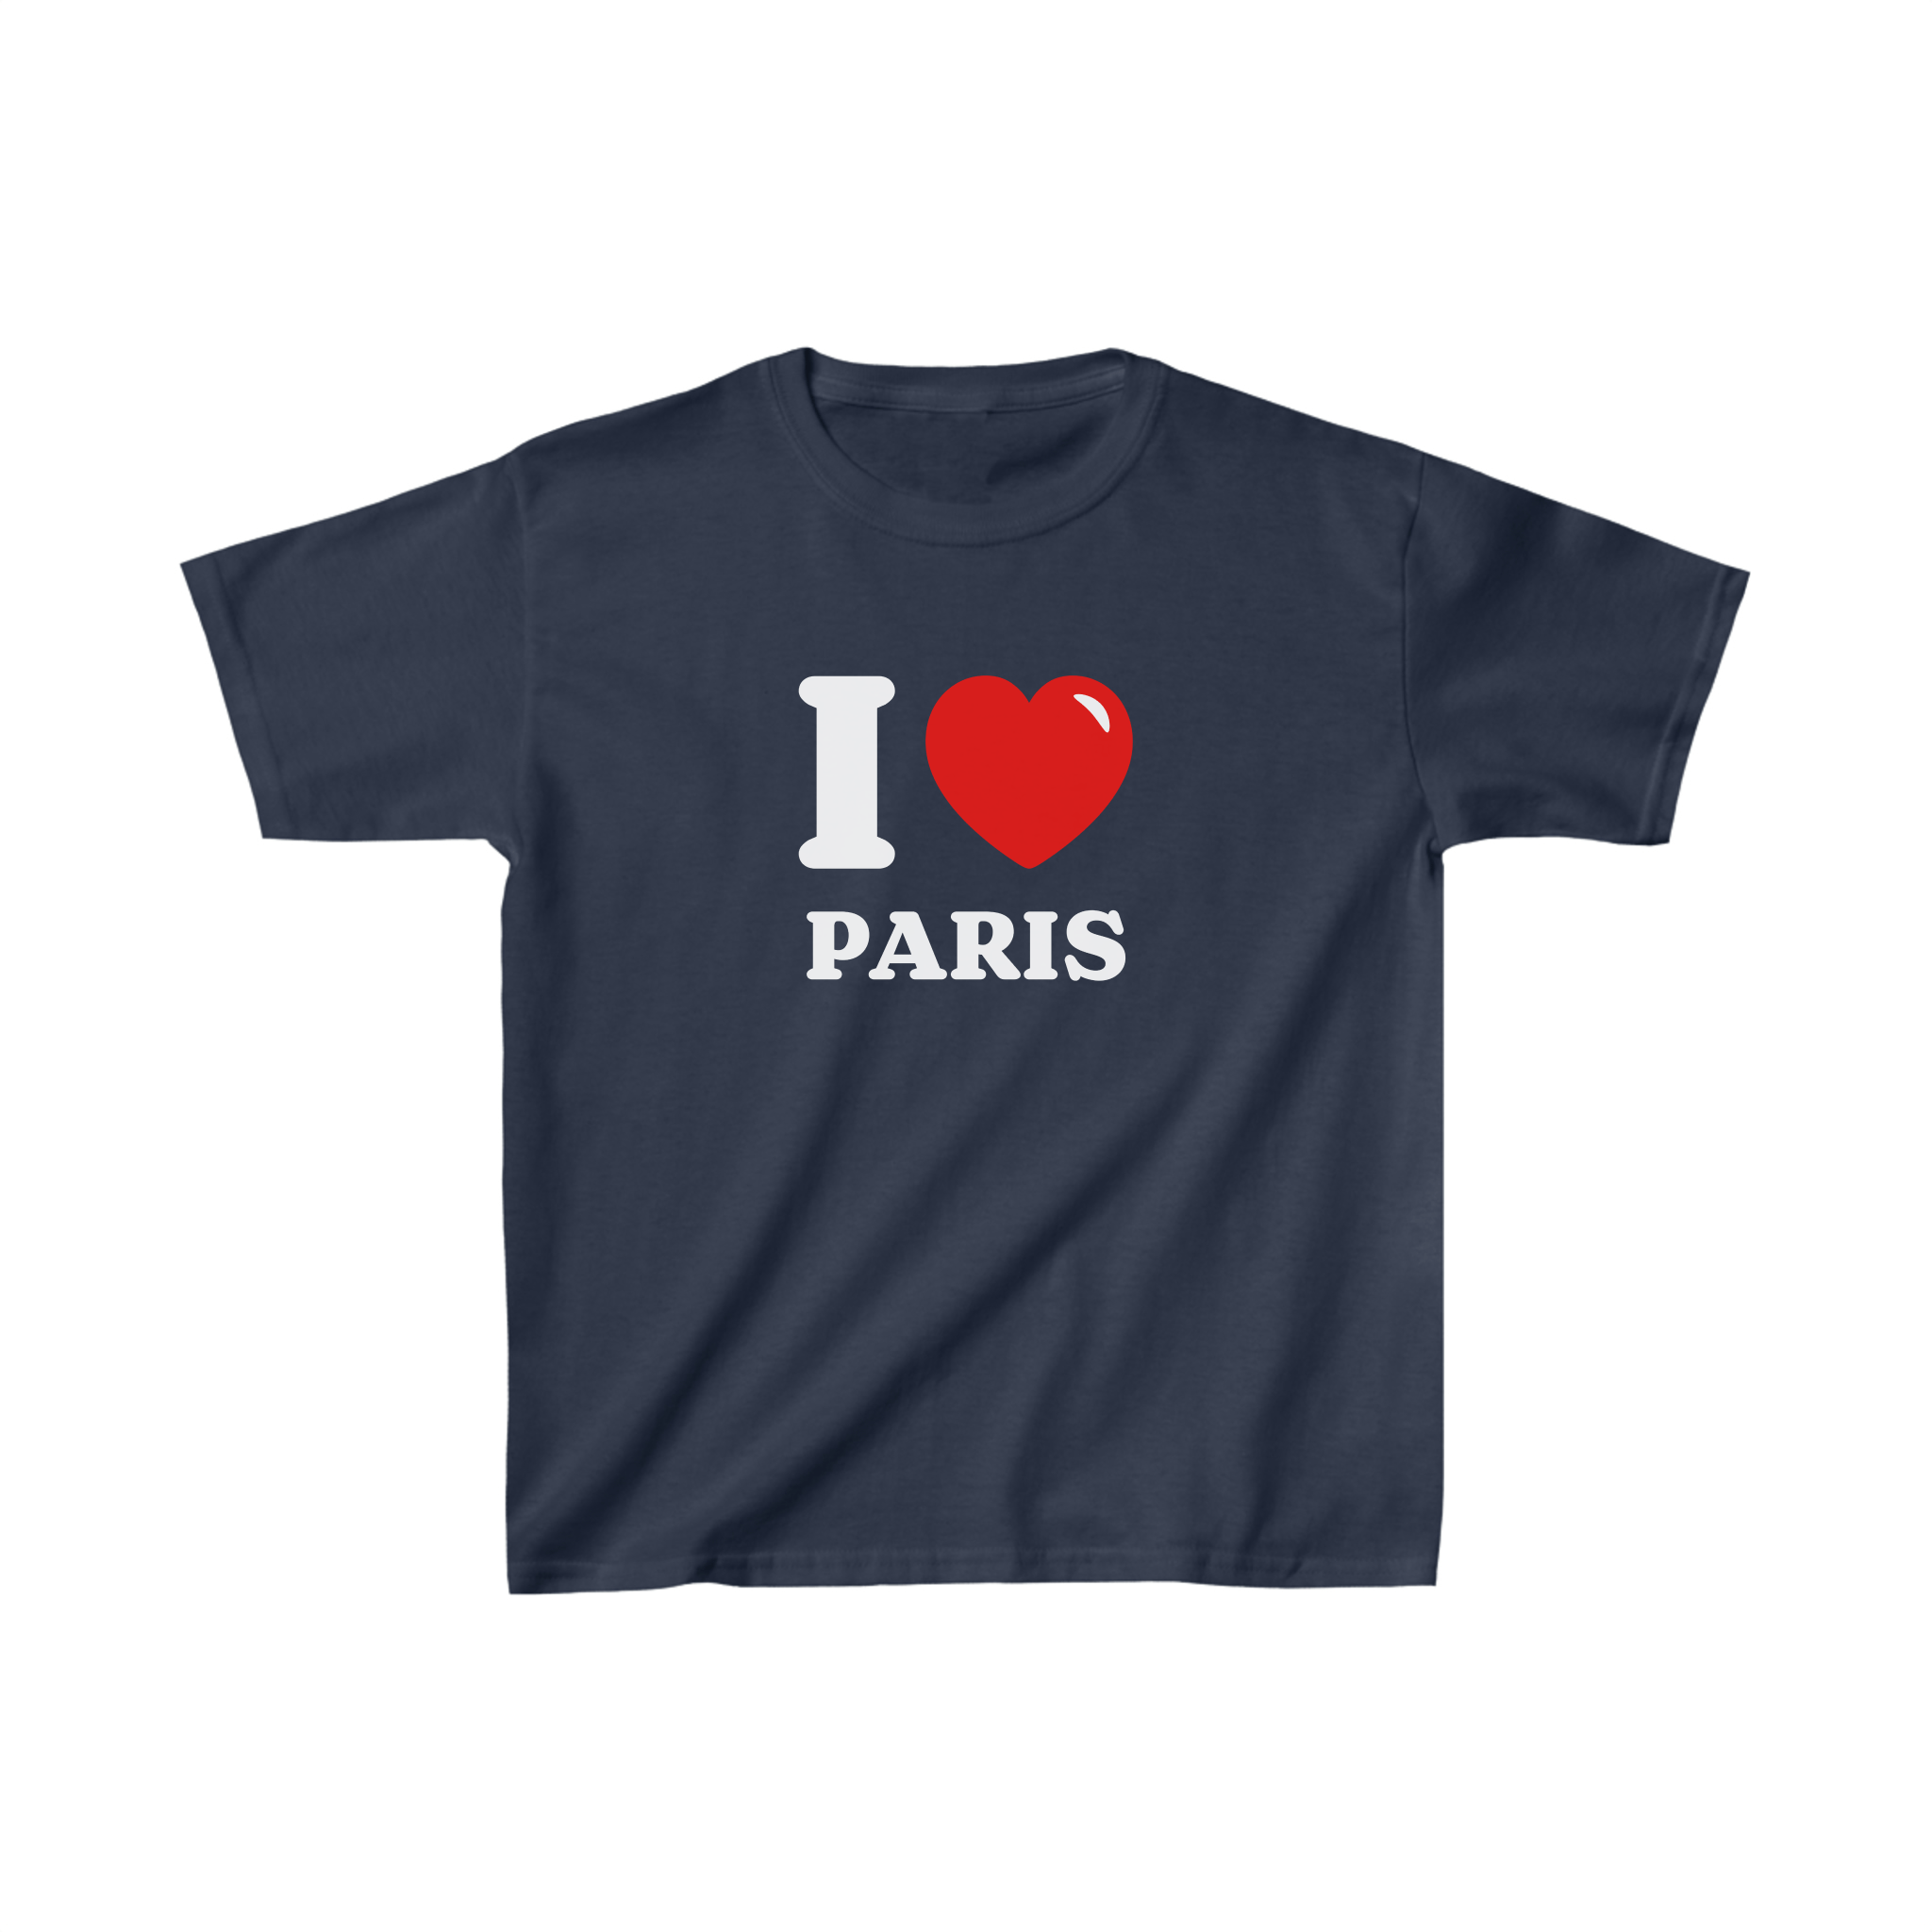 'I love Paris' baby tee - In Print We Trust